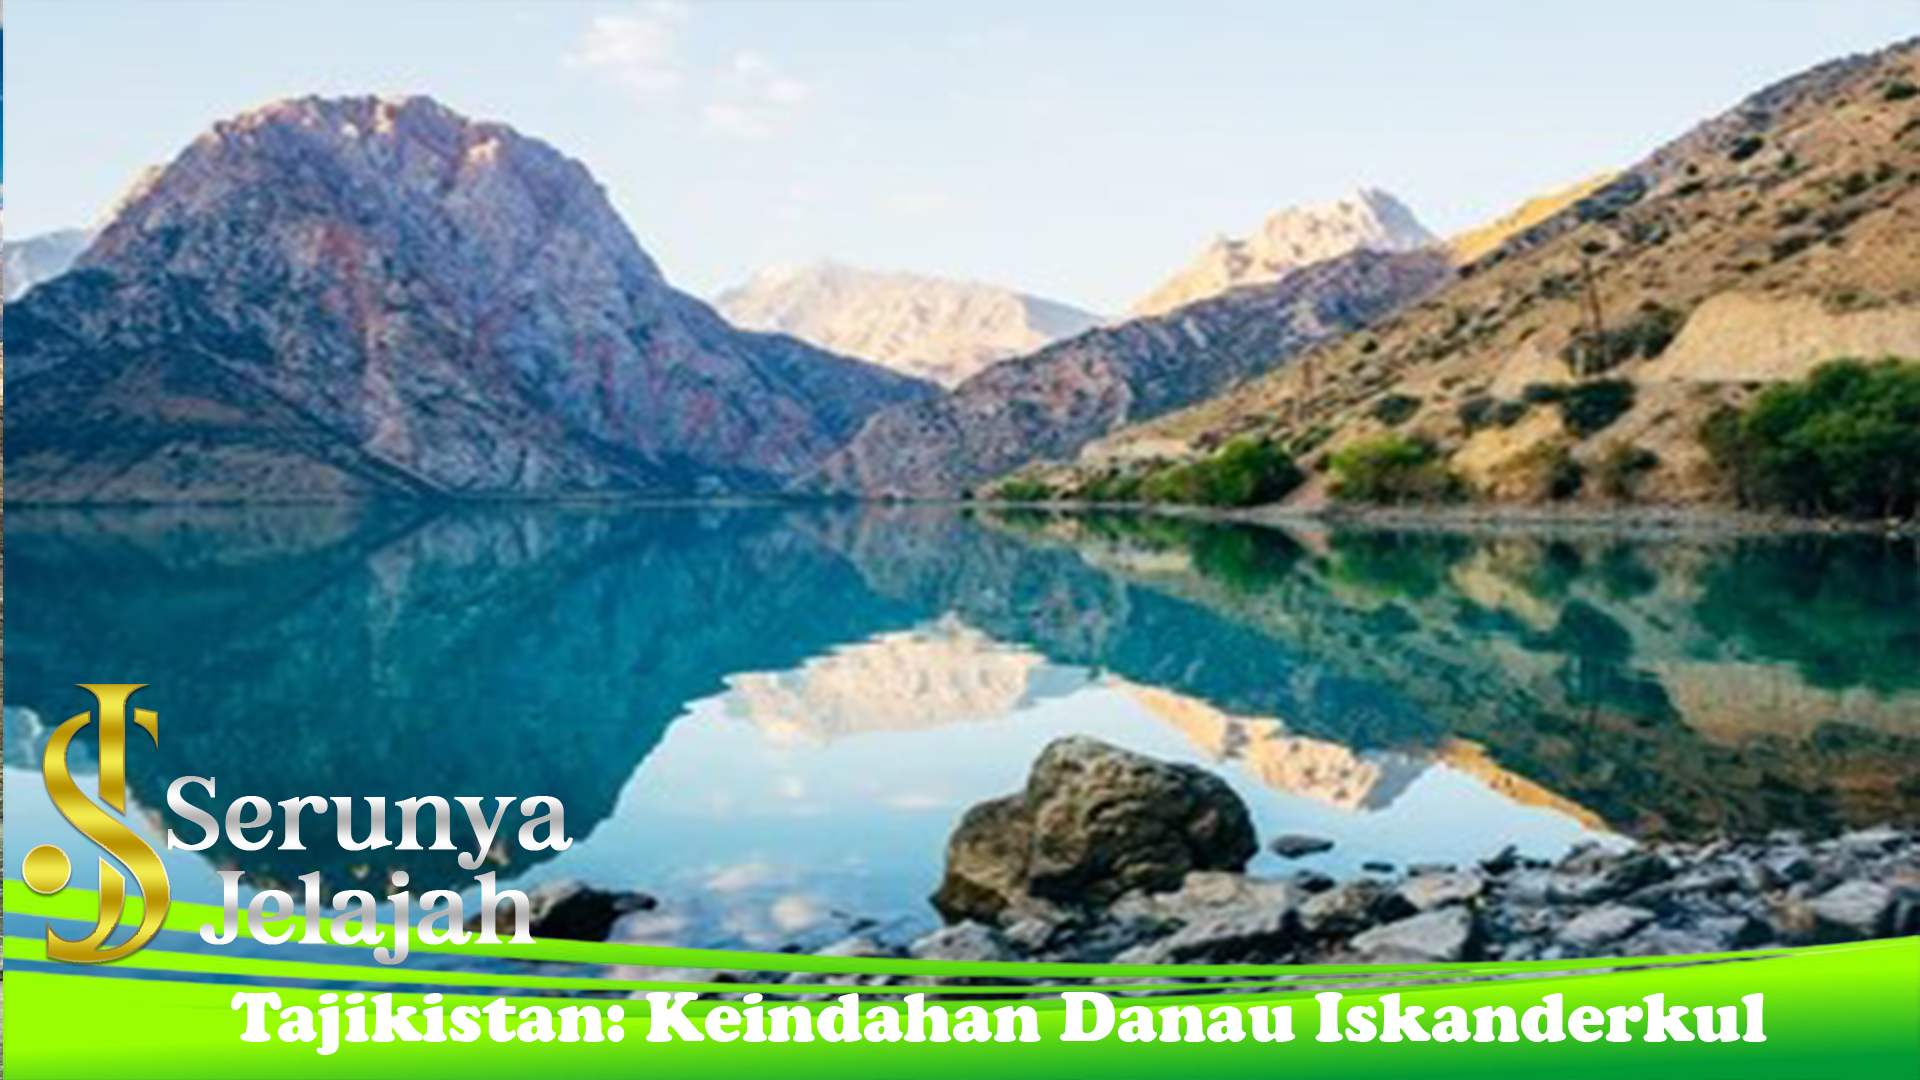 Tajikistan: Keindahan Danau Iskanderkul